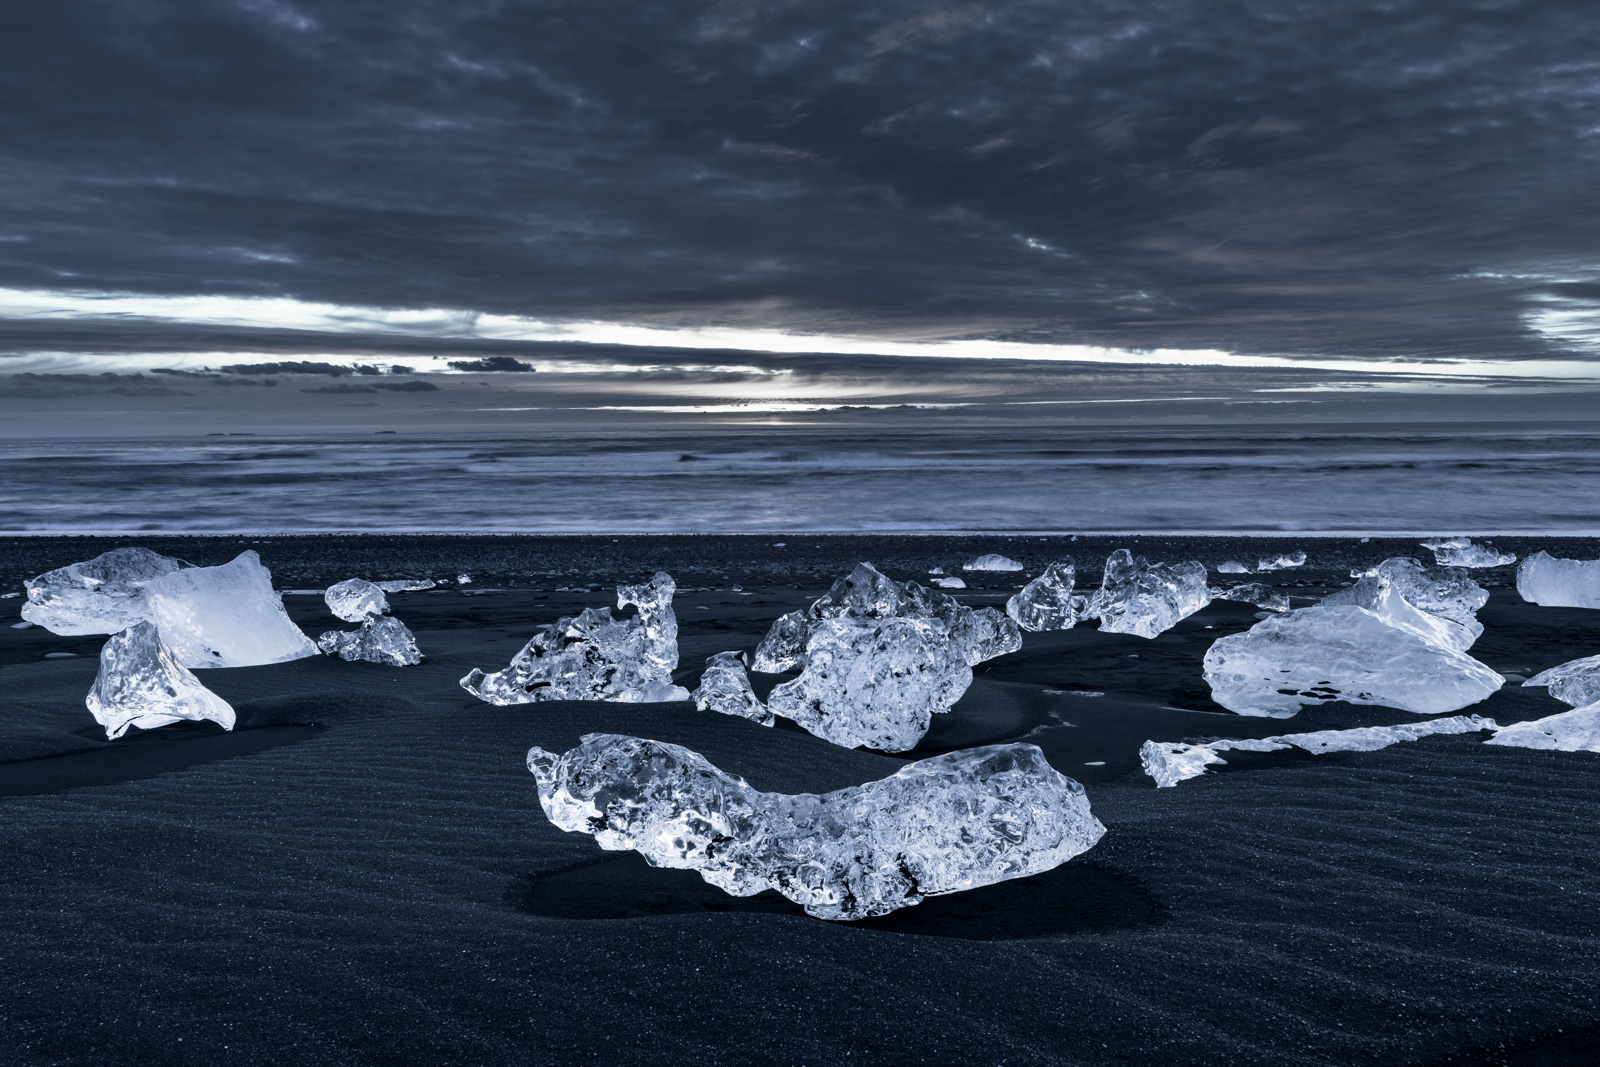  "Diamonds", Iceland 